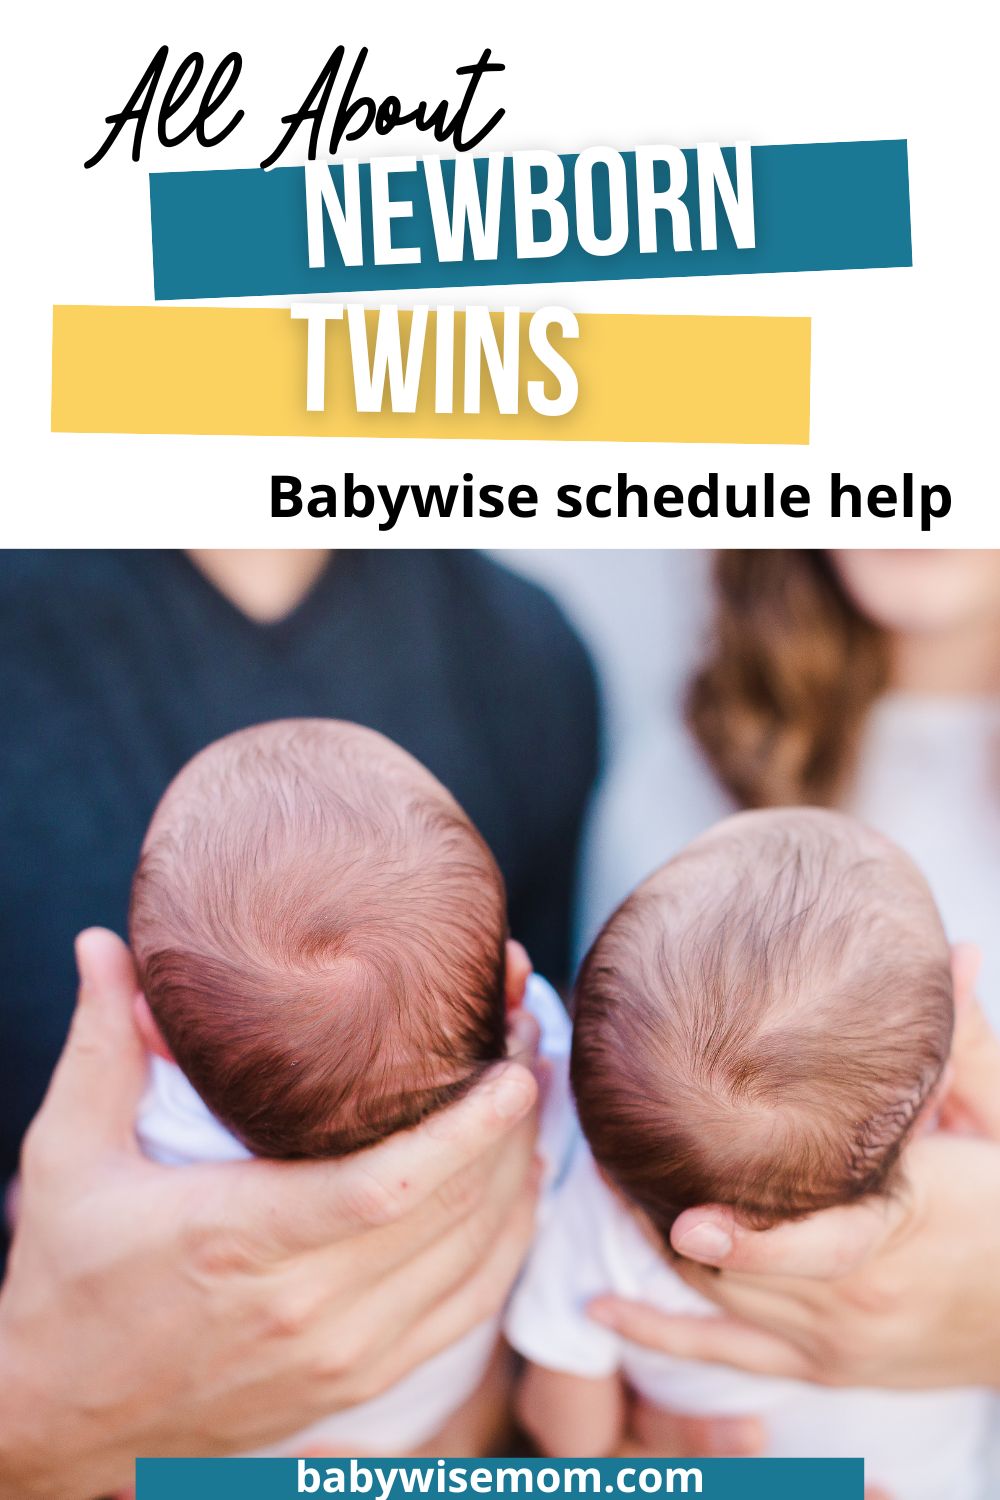 Babywise newborn twins pinnable image